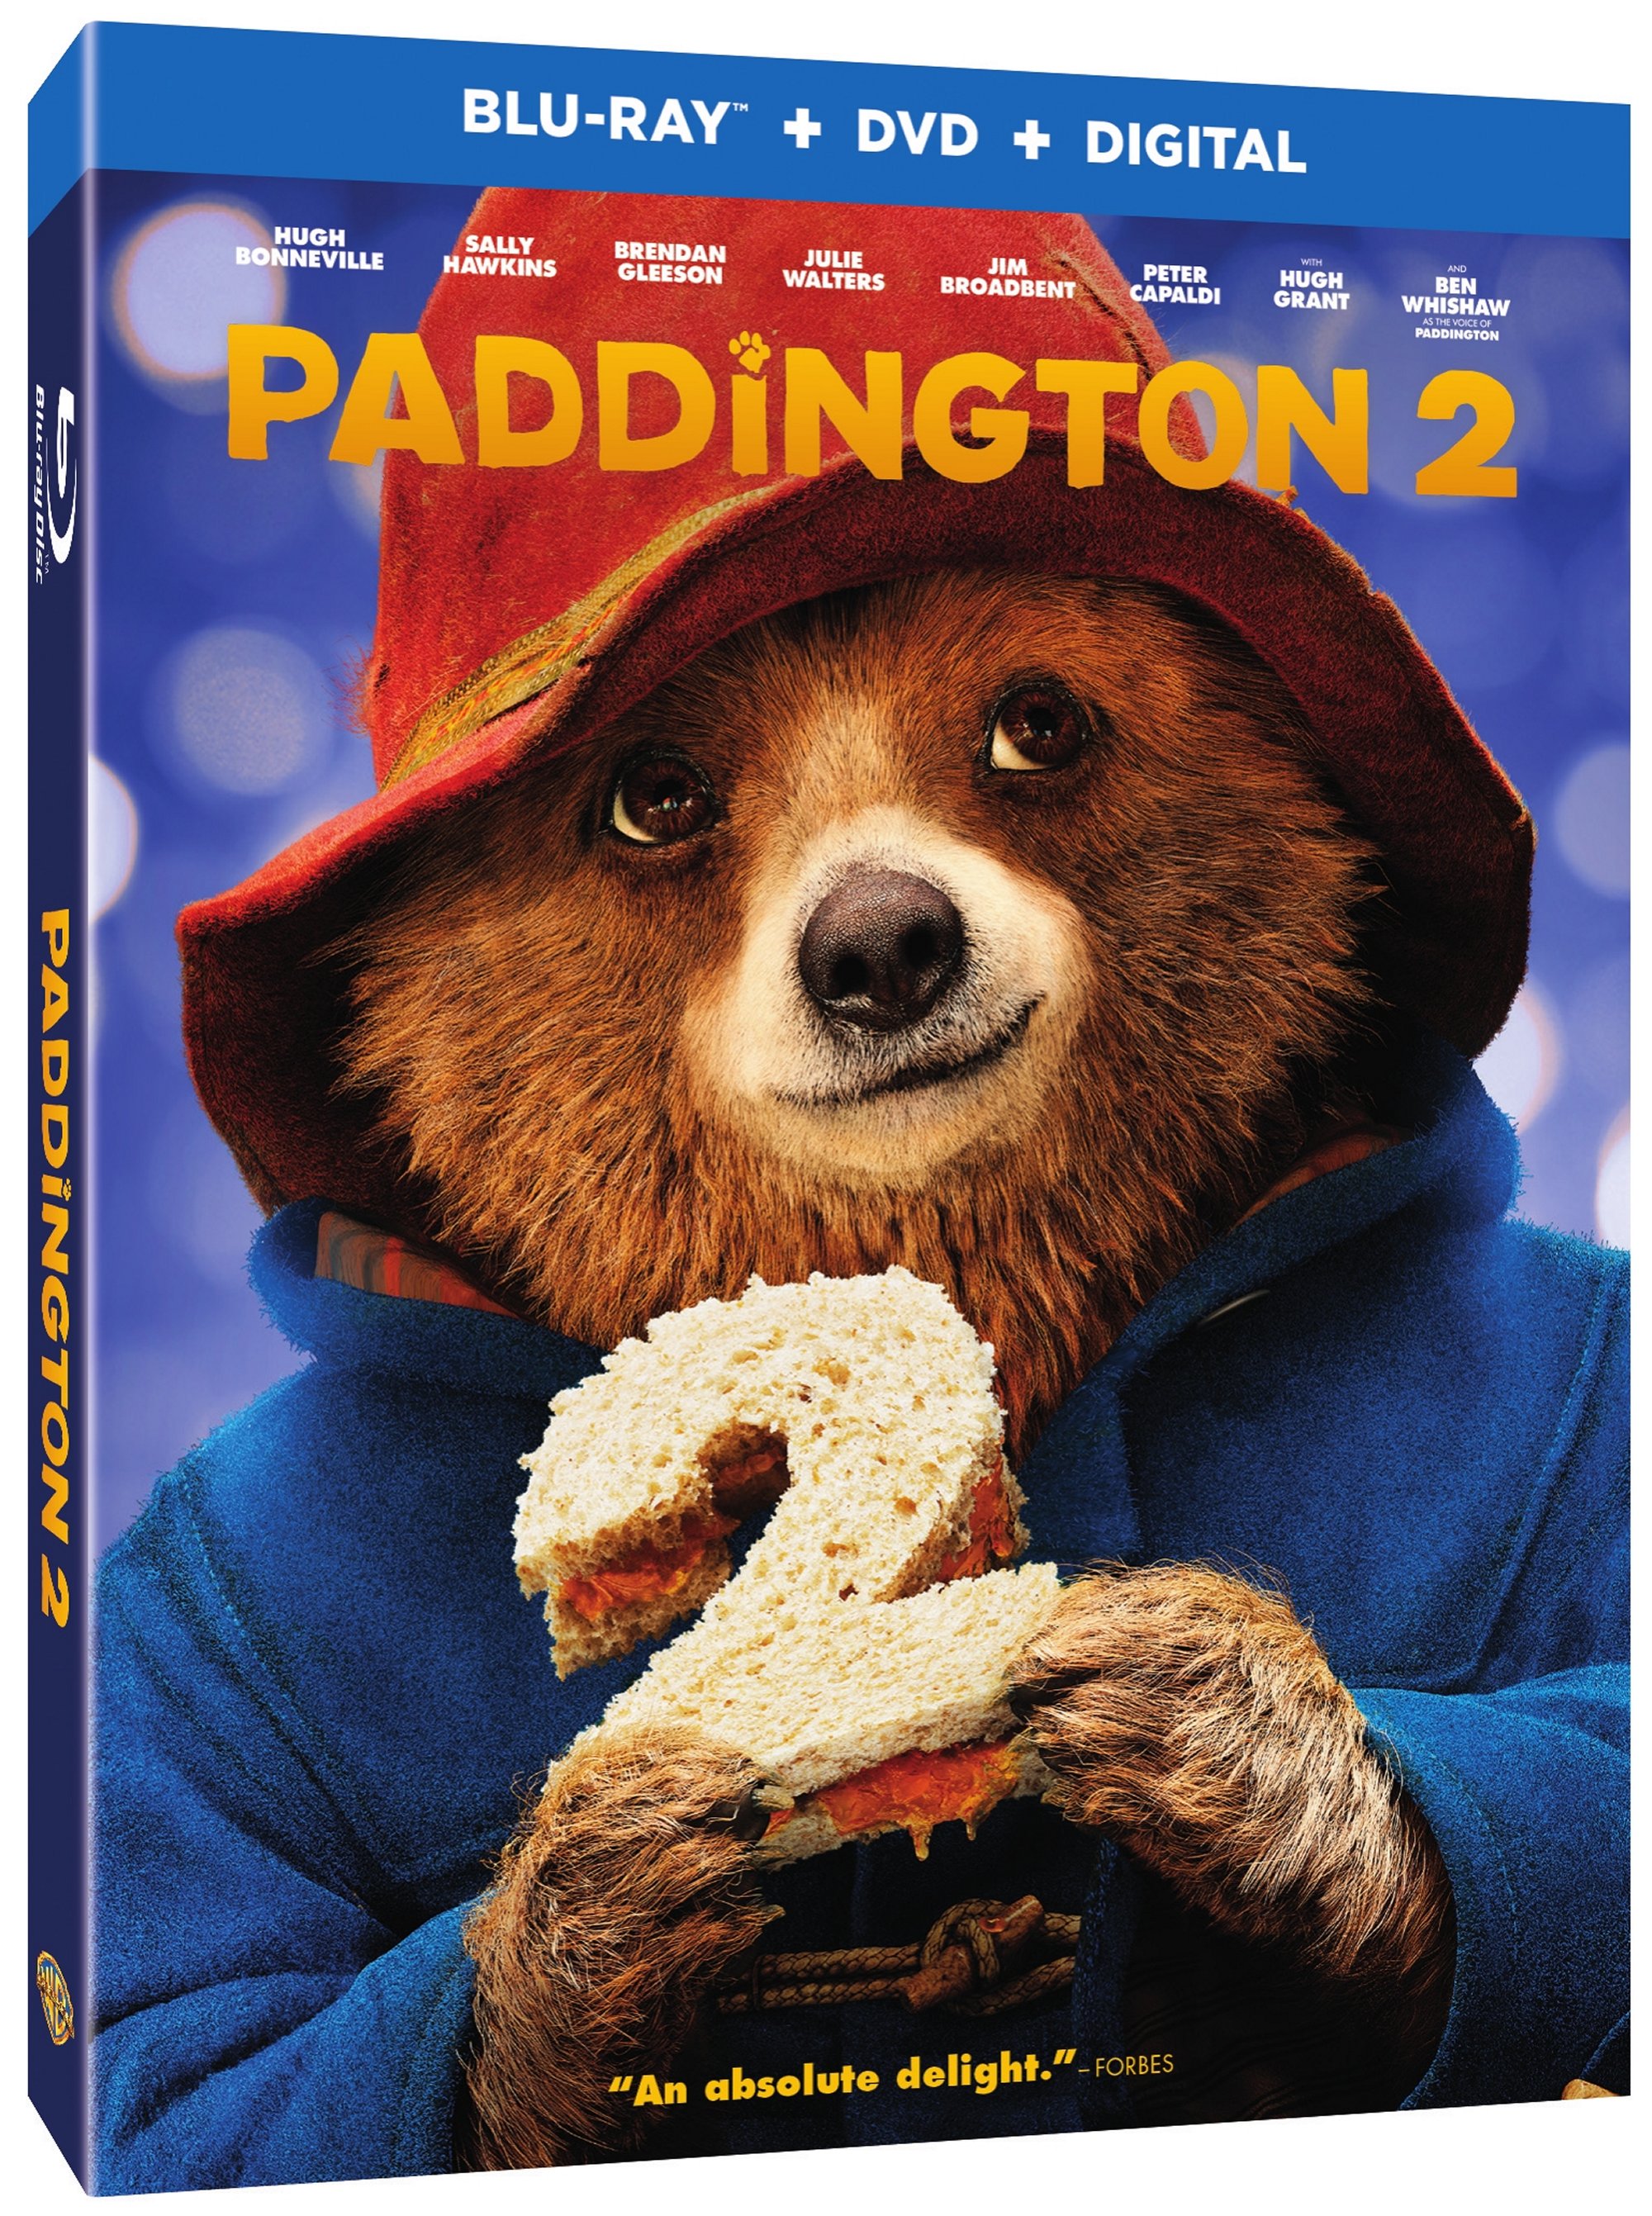 Paddington 2 Blu-Ray Combo Pack cover (Warner Bros. Home Entertainment)